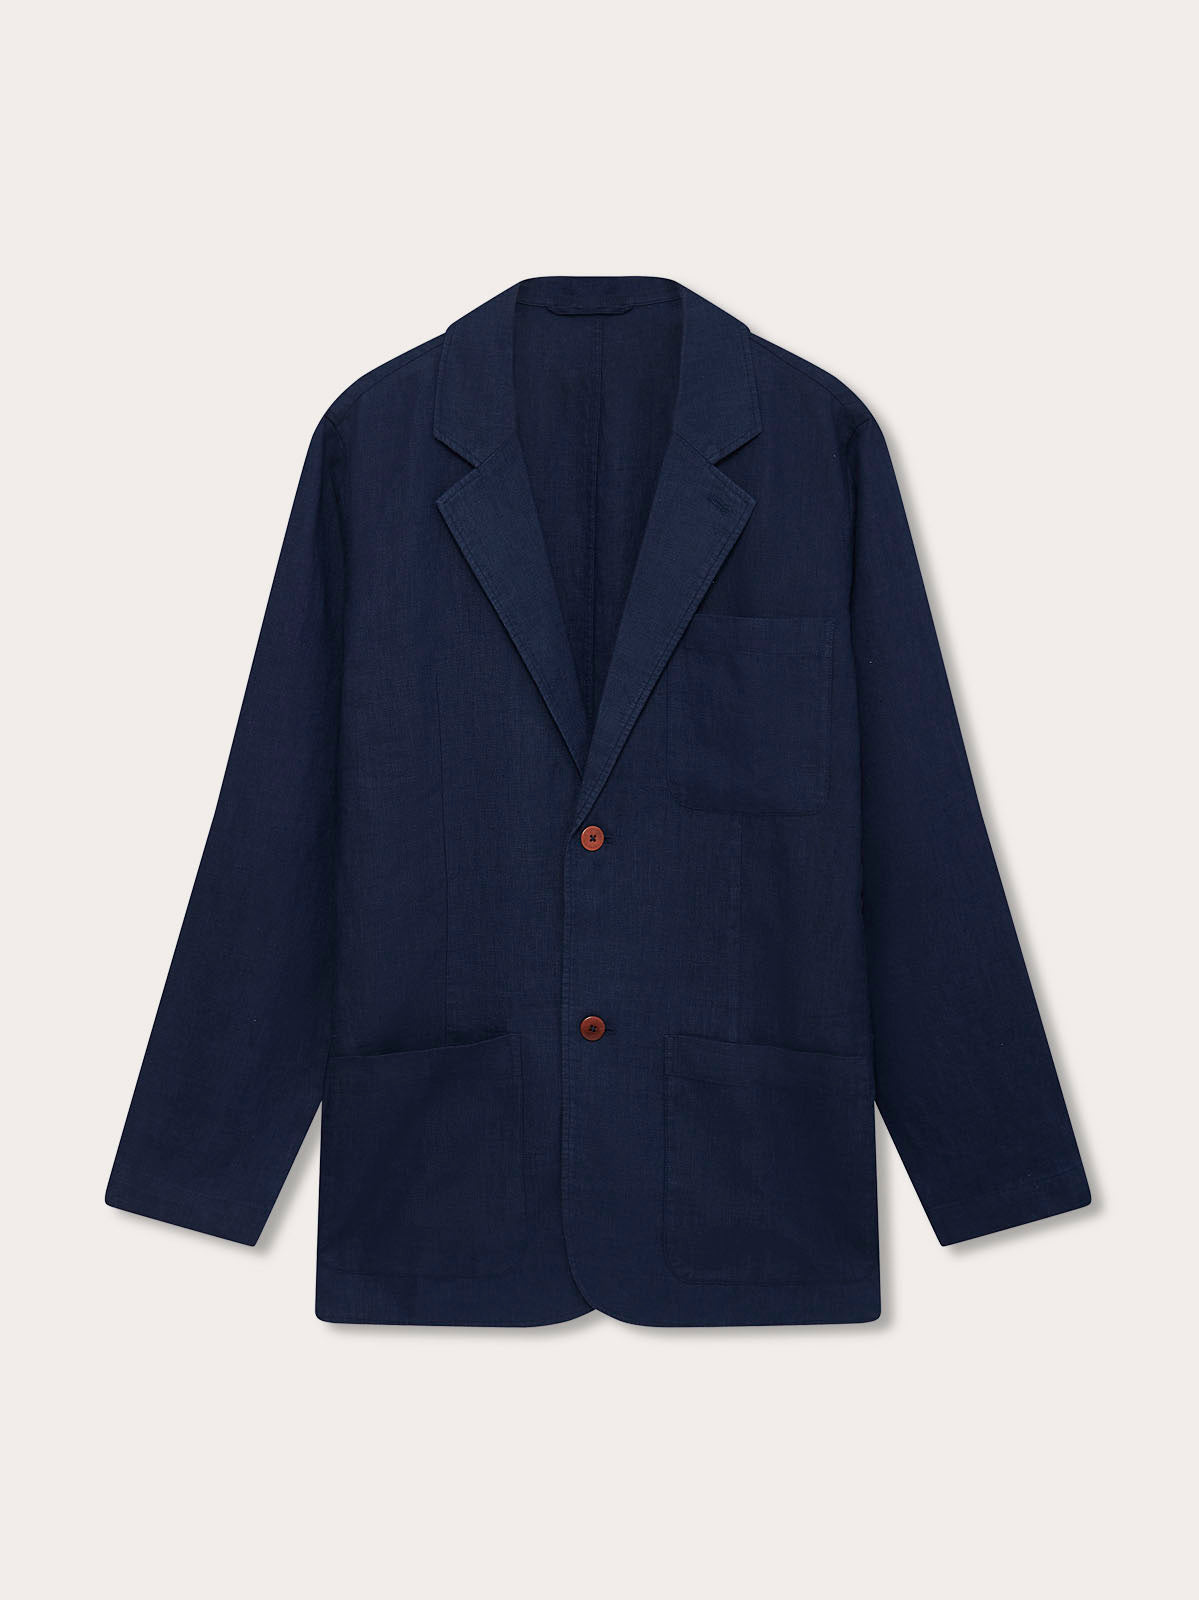 Men’s Navy Blue Nassau Linen Jacket